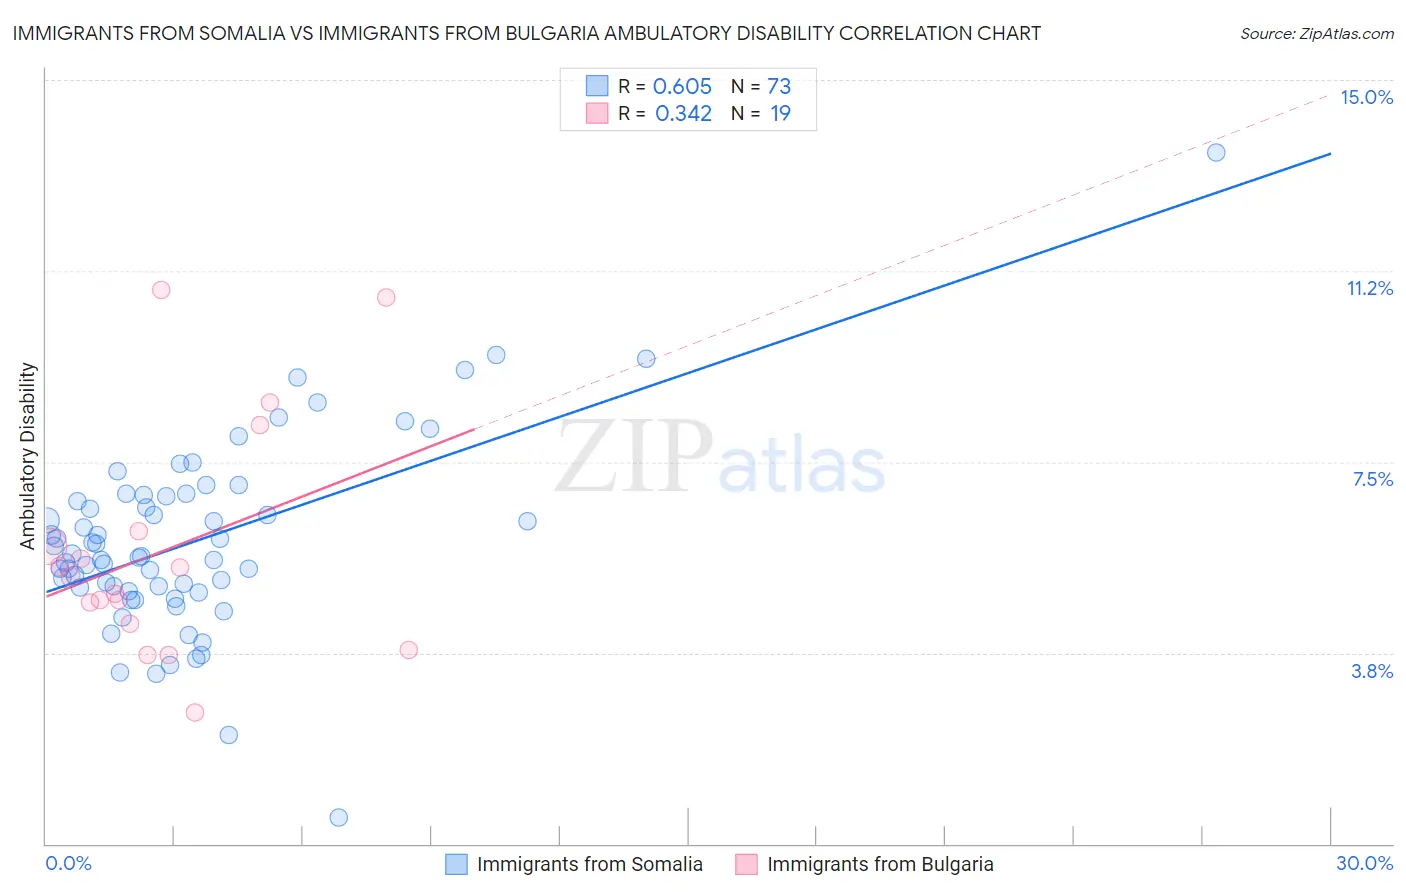 Immigrants from Somalia vs Immigrants from Bulgaria Ambulatory Disability